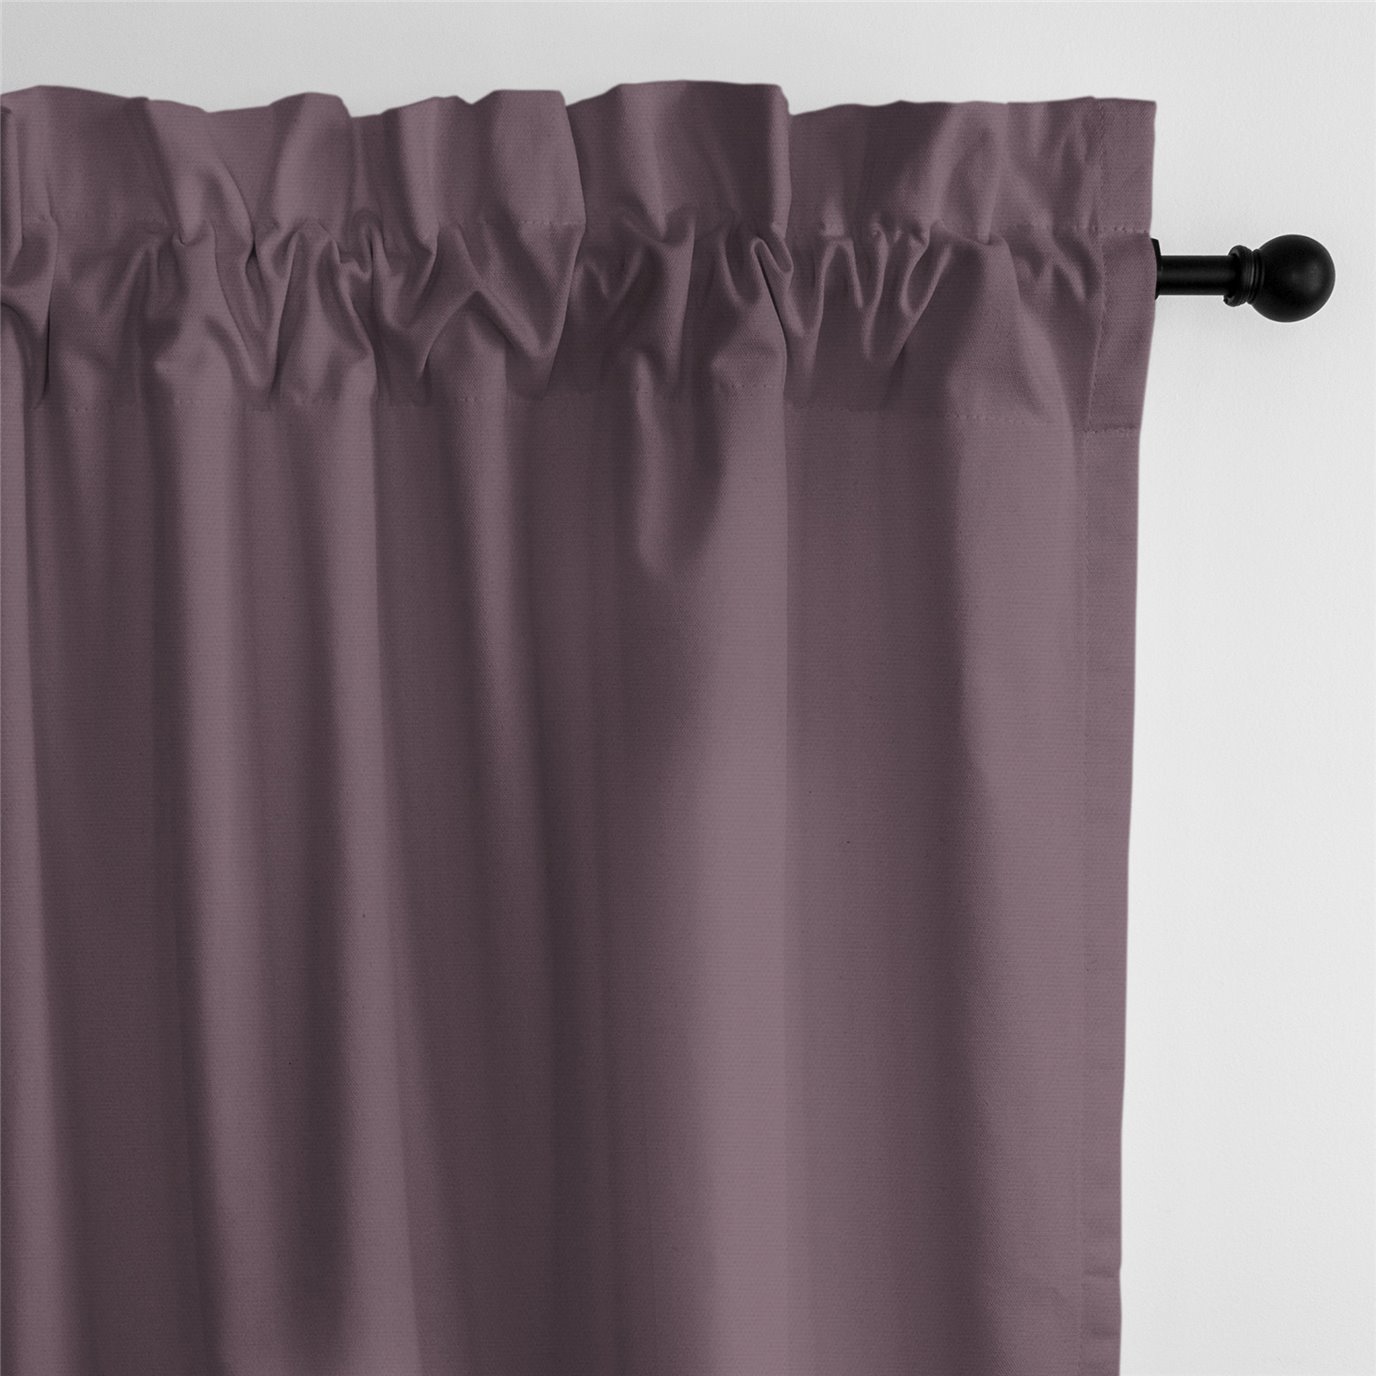 Braxton Purple Grape Pole Top Drapery Panel - Pair - Size 50"x96"